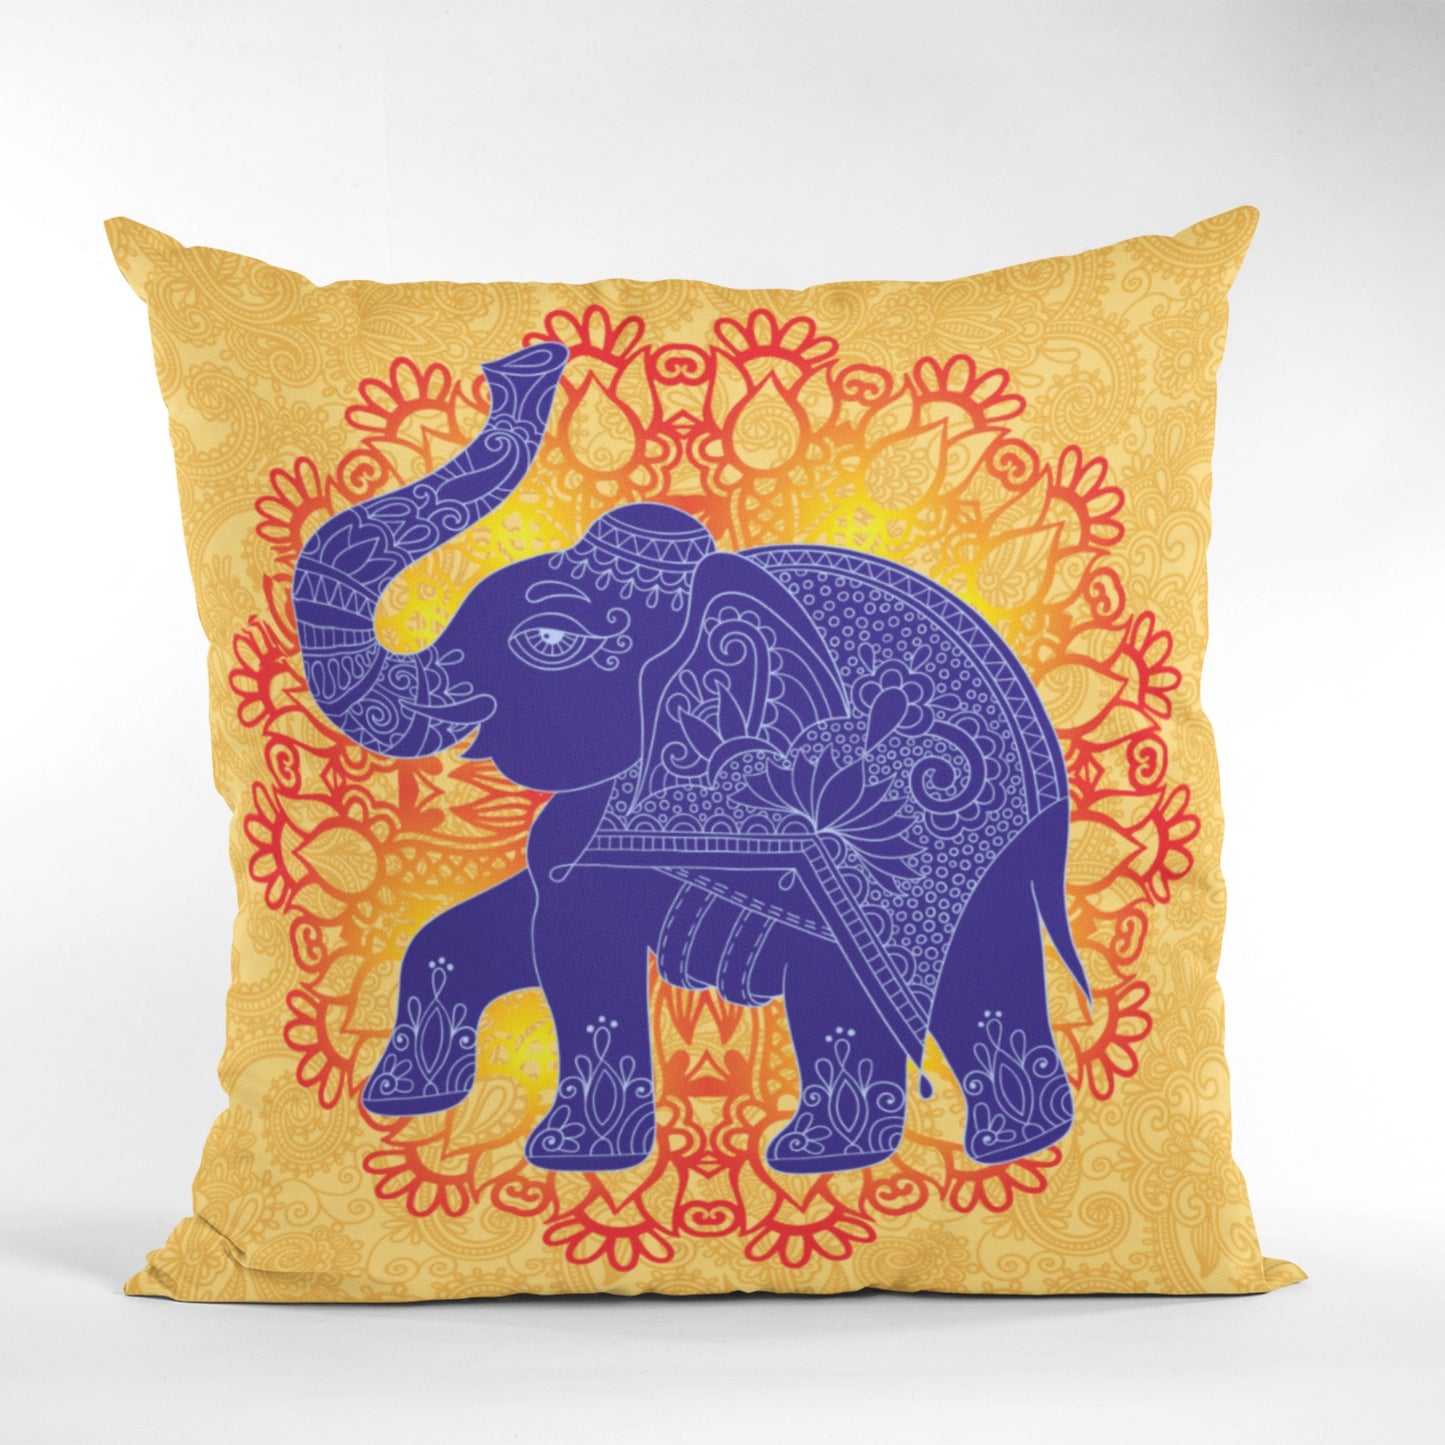 Artistic Mandala and Elephant Pillow